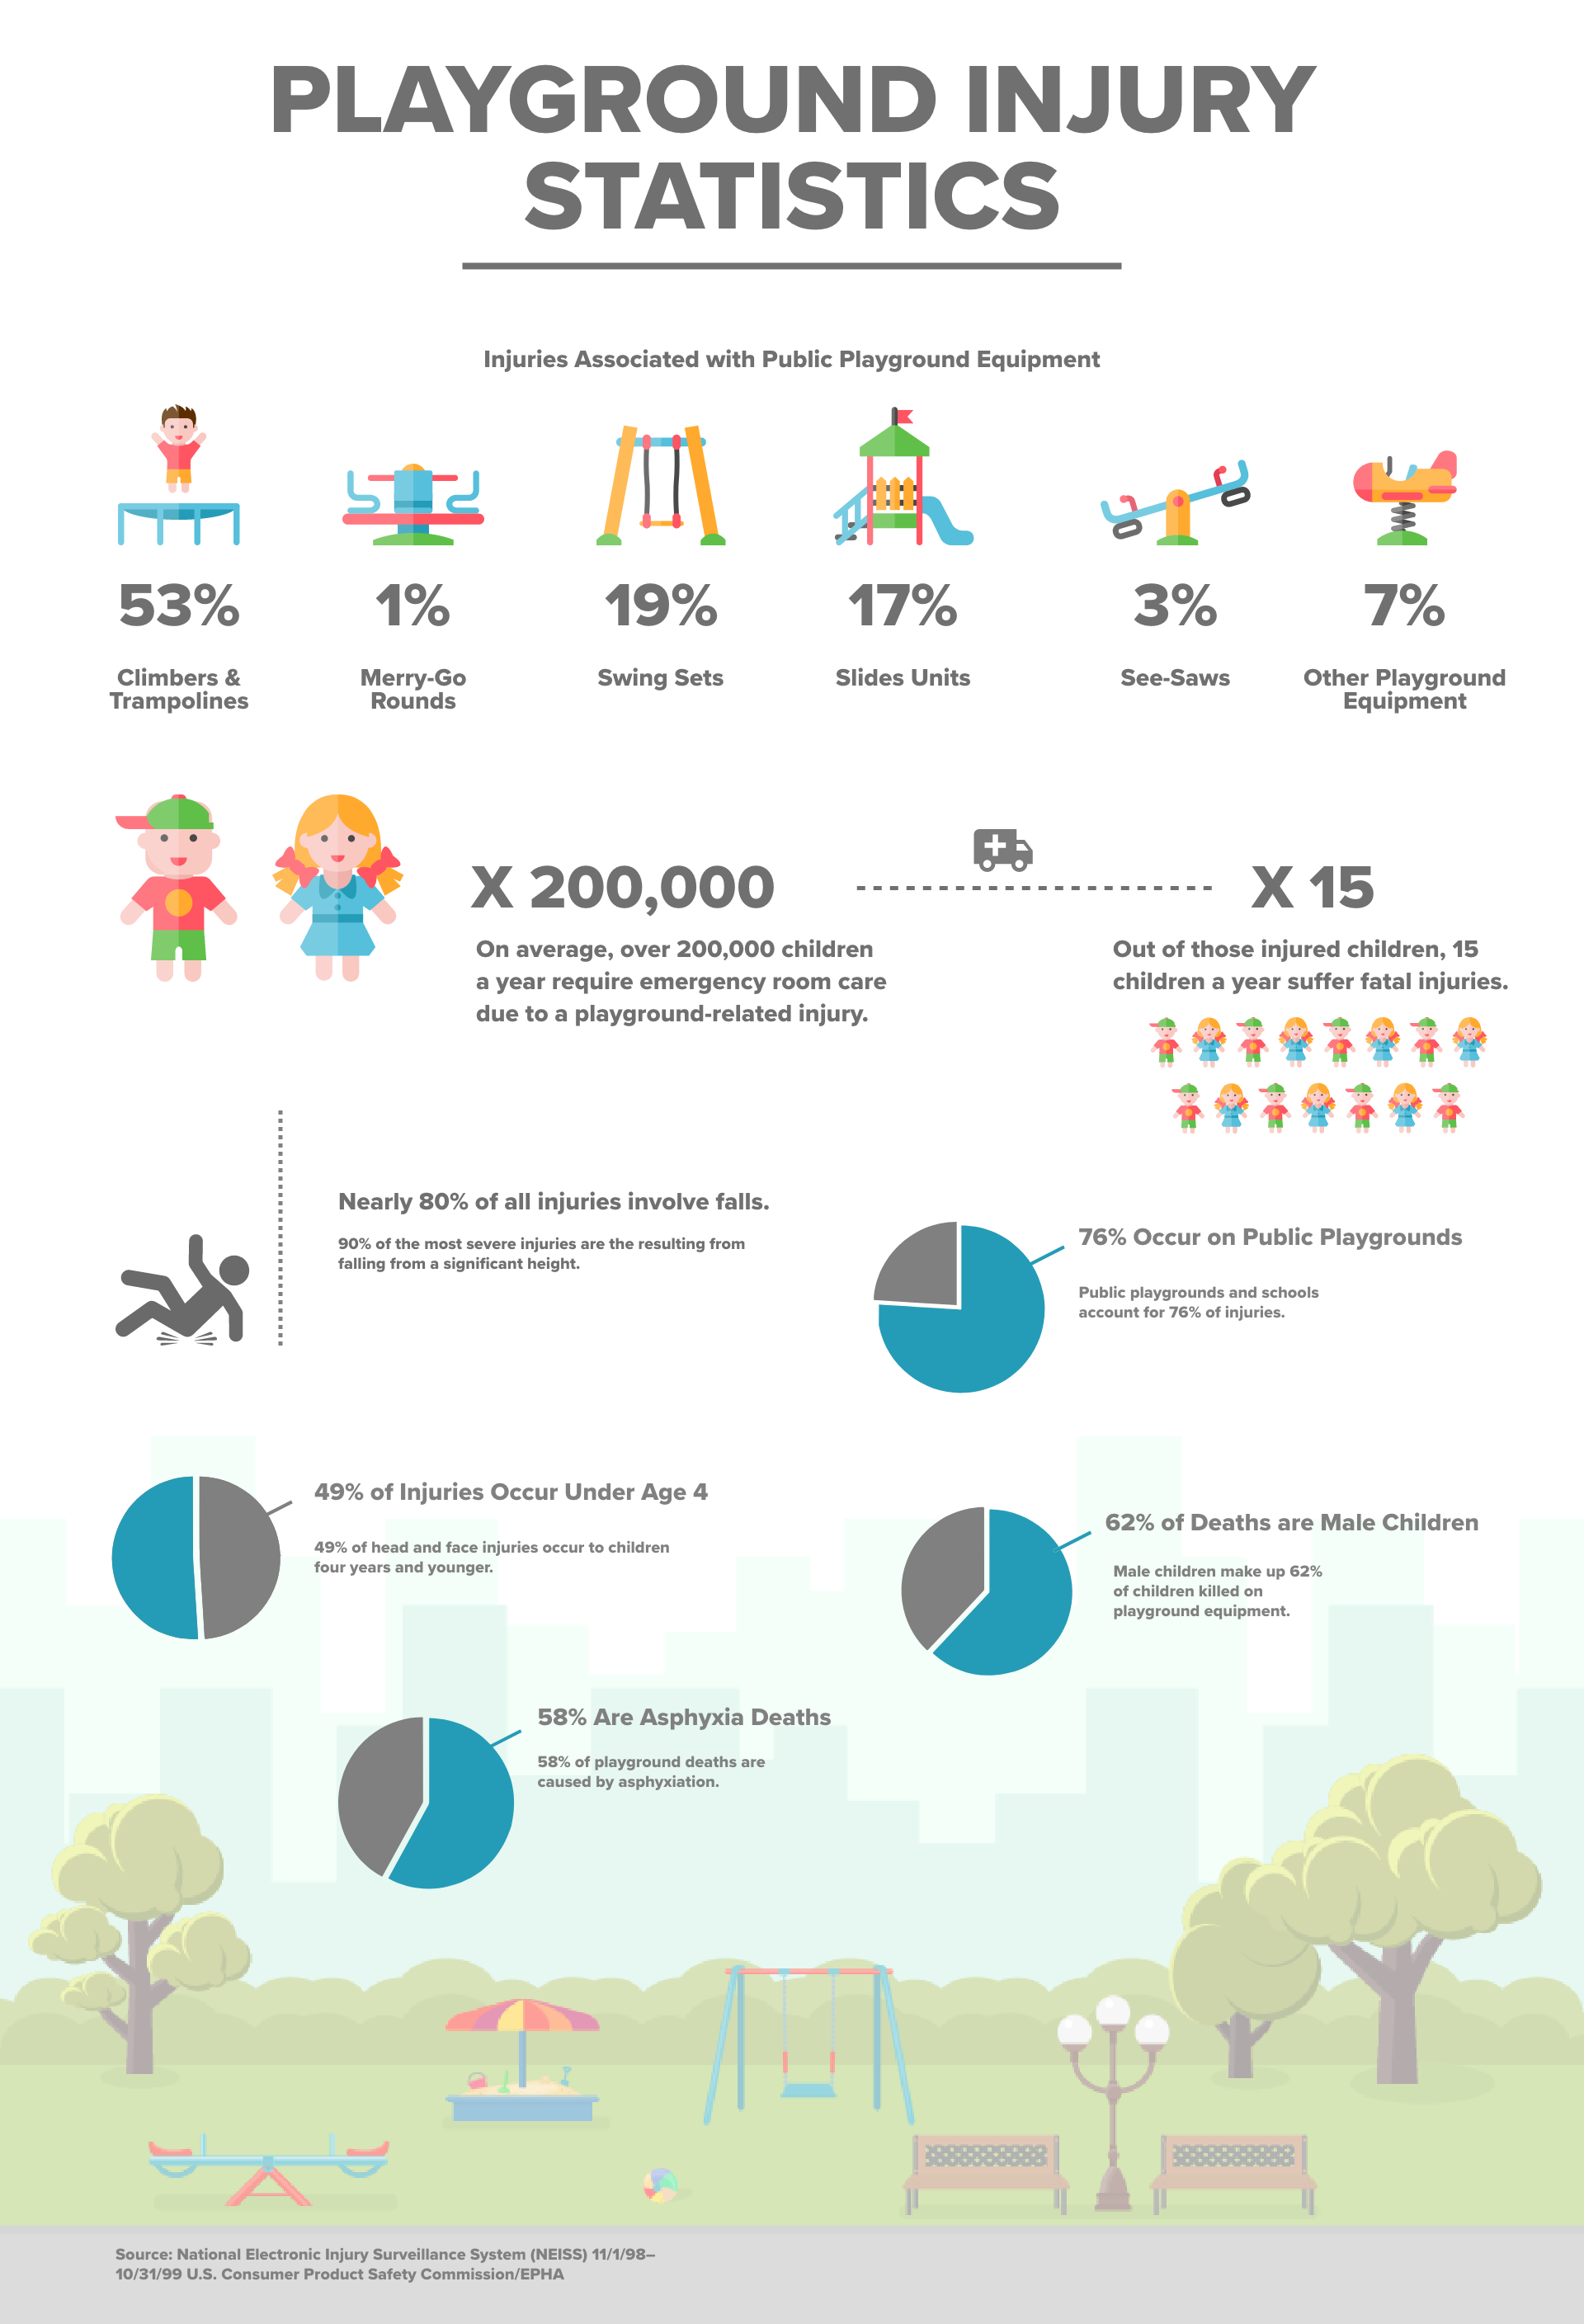 Playground Statistics - Most